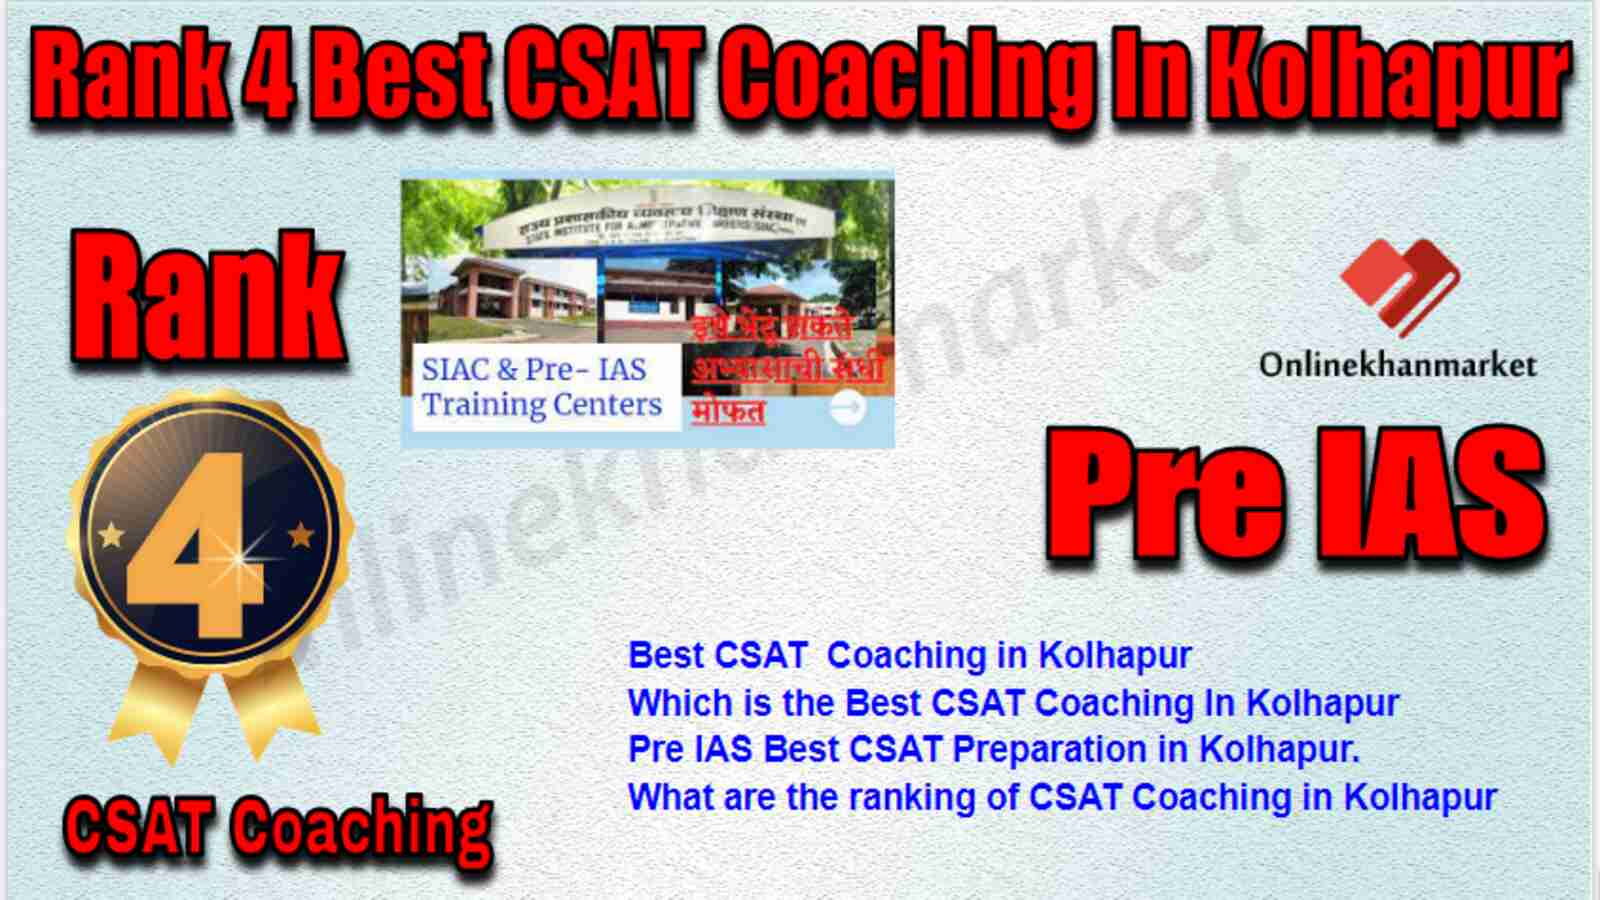 Rank 4 Best CSAT Coaching in Kolhapur